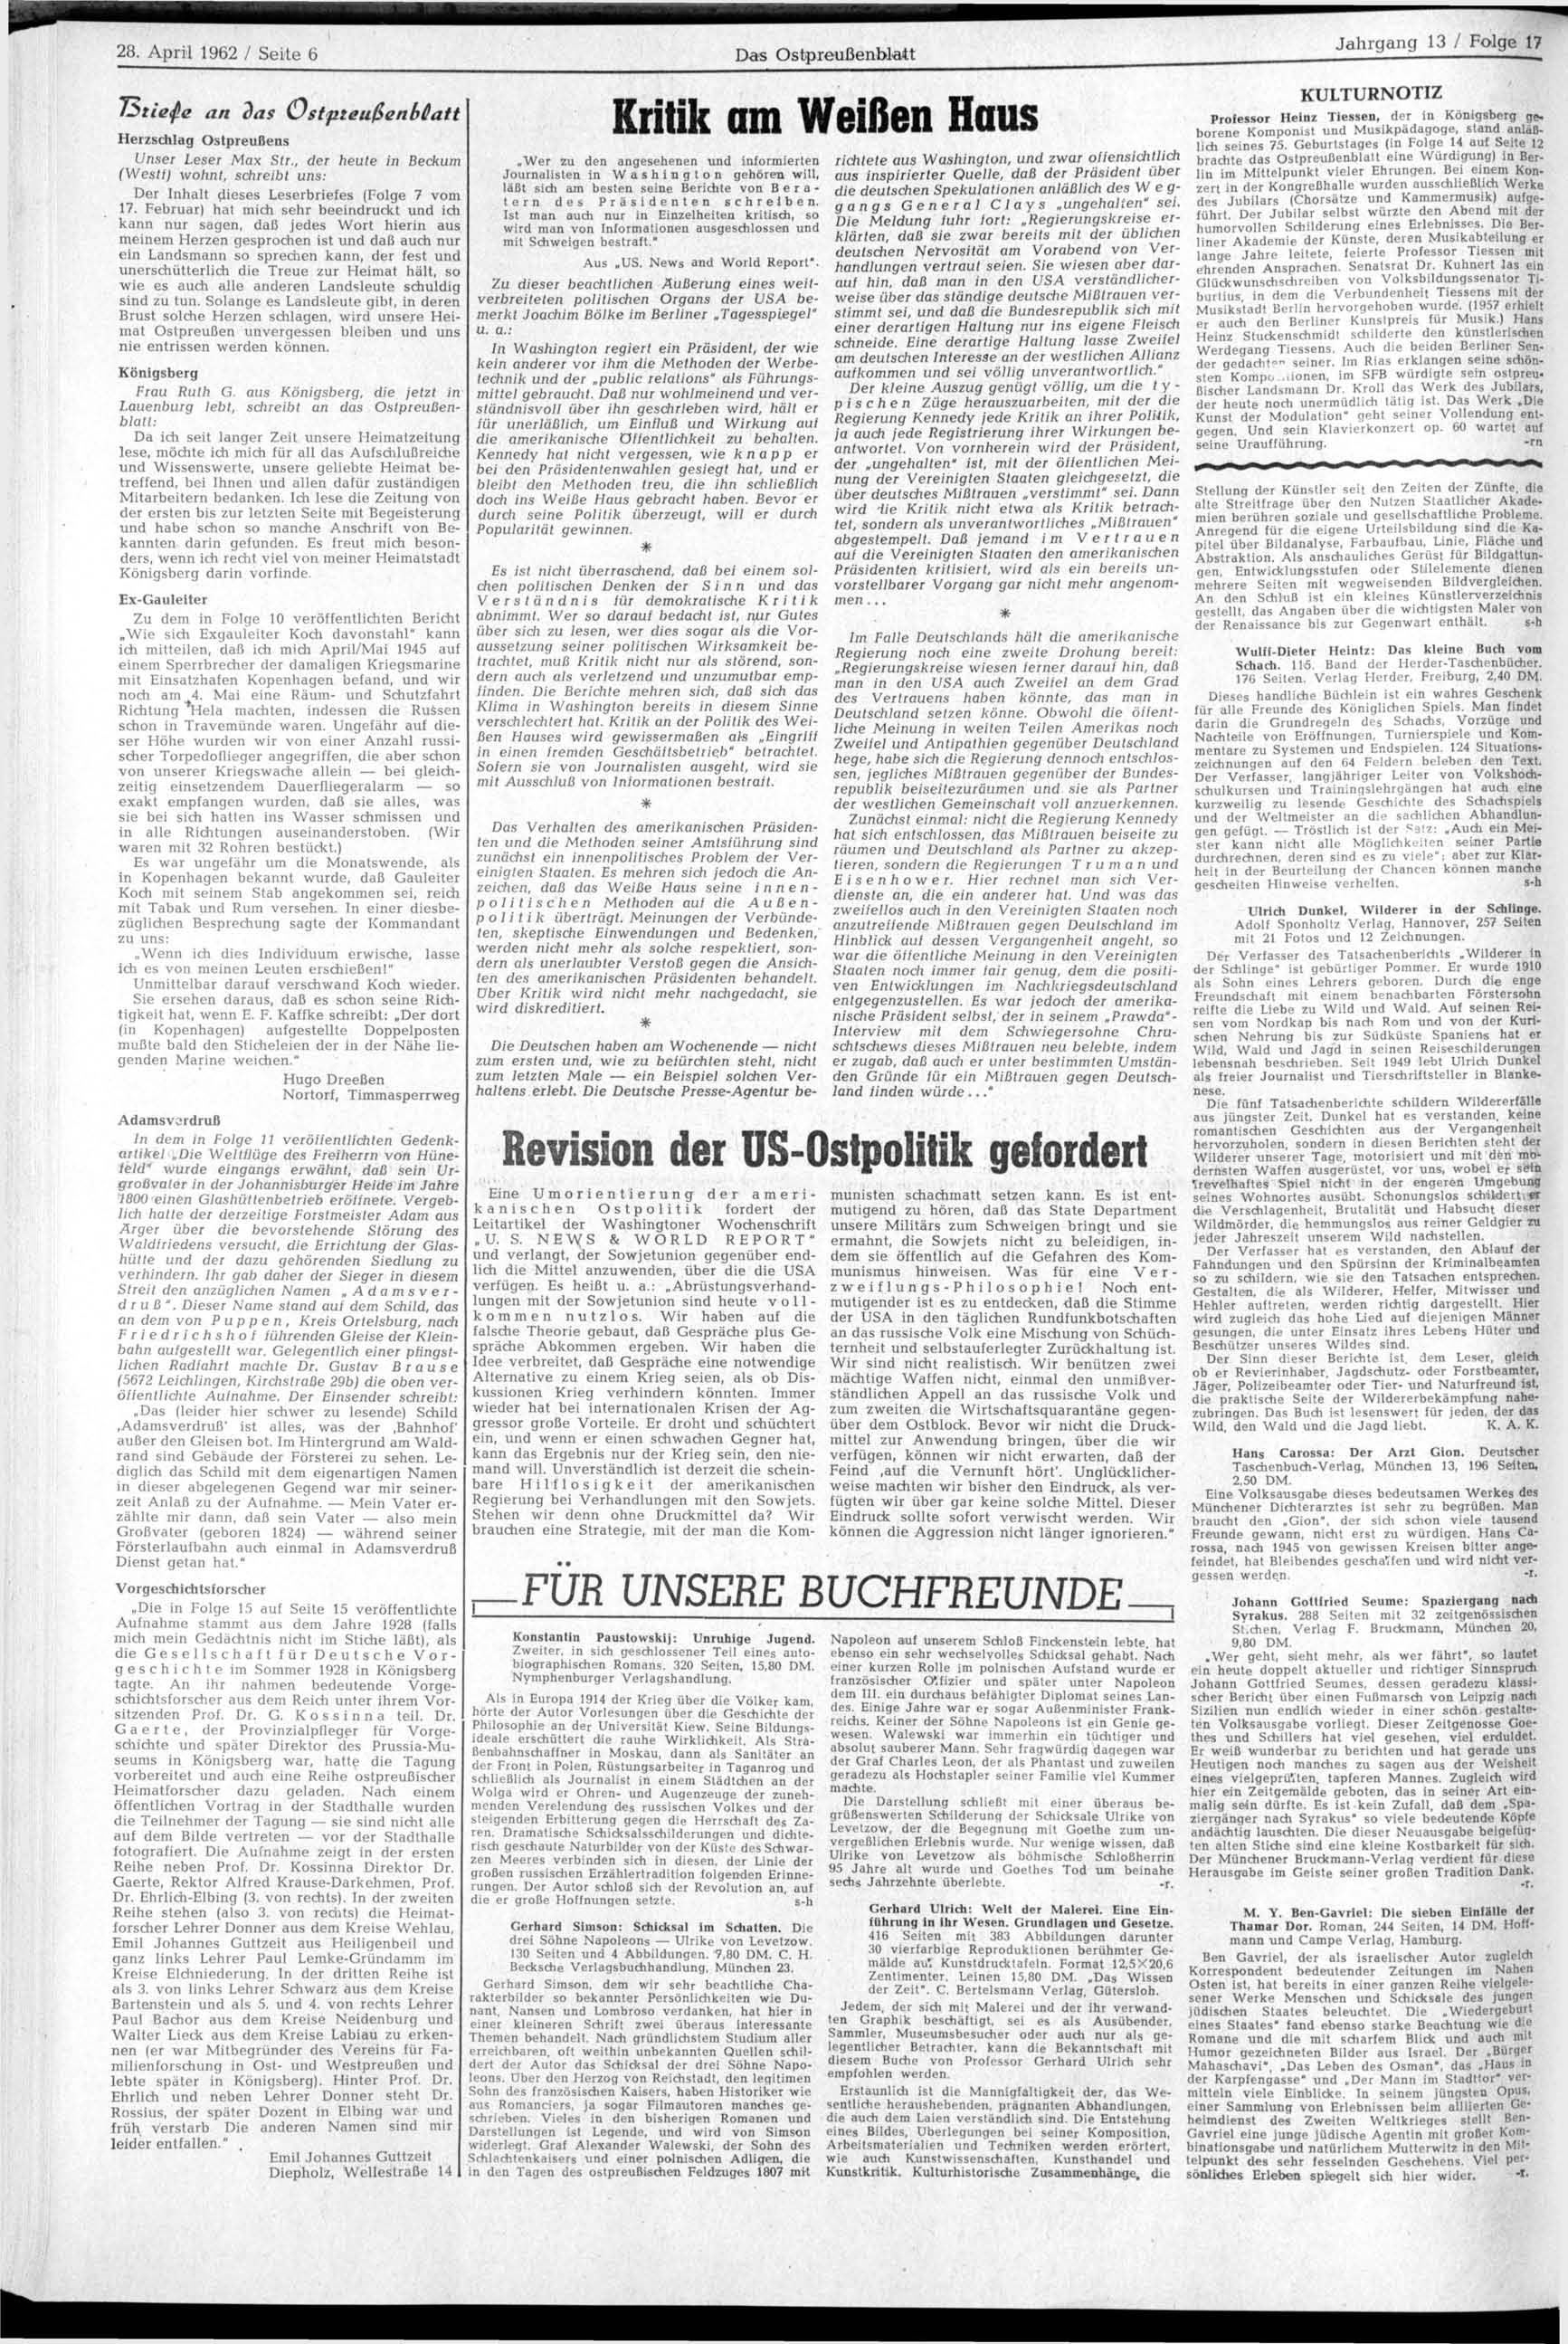 28. April 1962 / Seite 6 Das Ostpreußenblatt 75rie<ße an das Ostftteußenbßatt Herzschlag Ostpreußens Unser Leser Max Str.